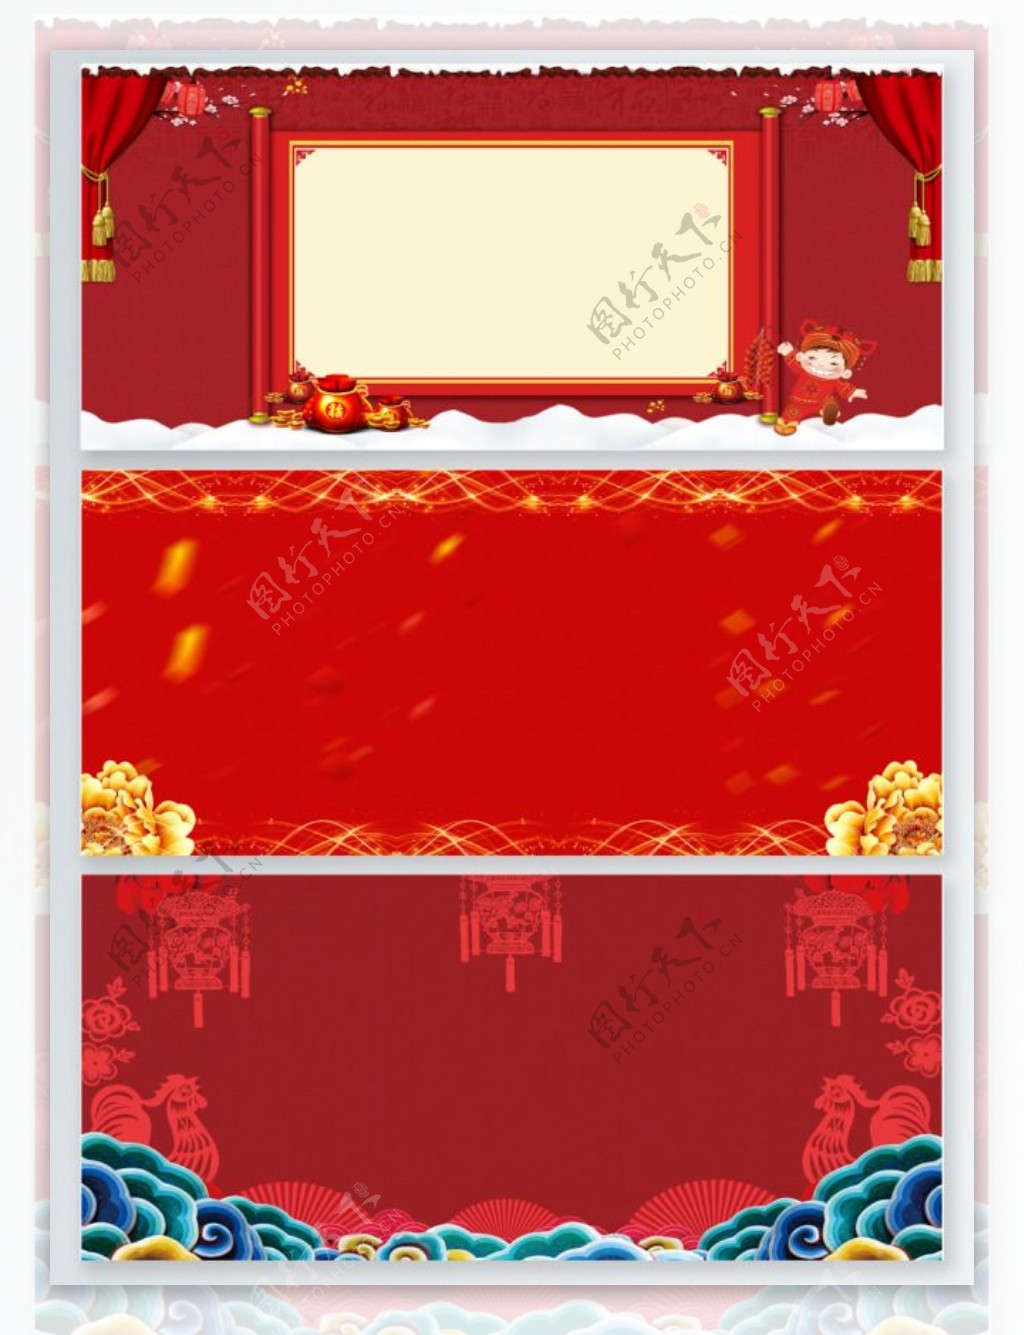 中式喜庆过年banner背景图